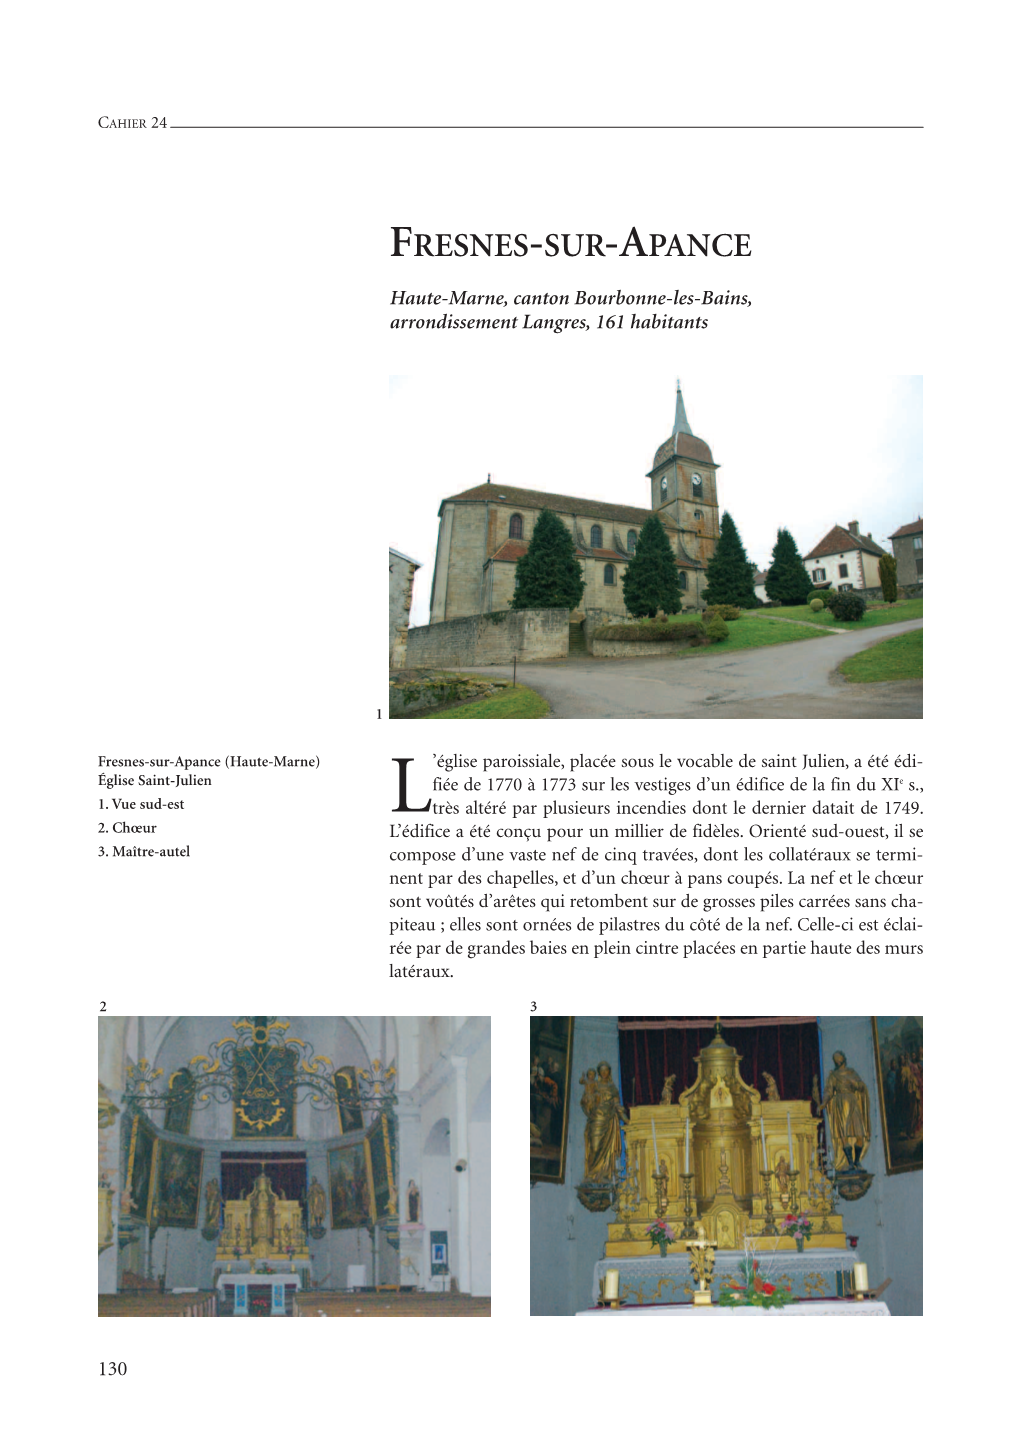 Fresnes-Sur-Apance